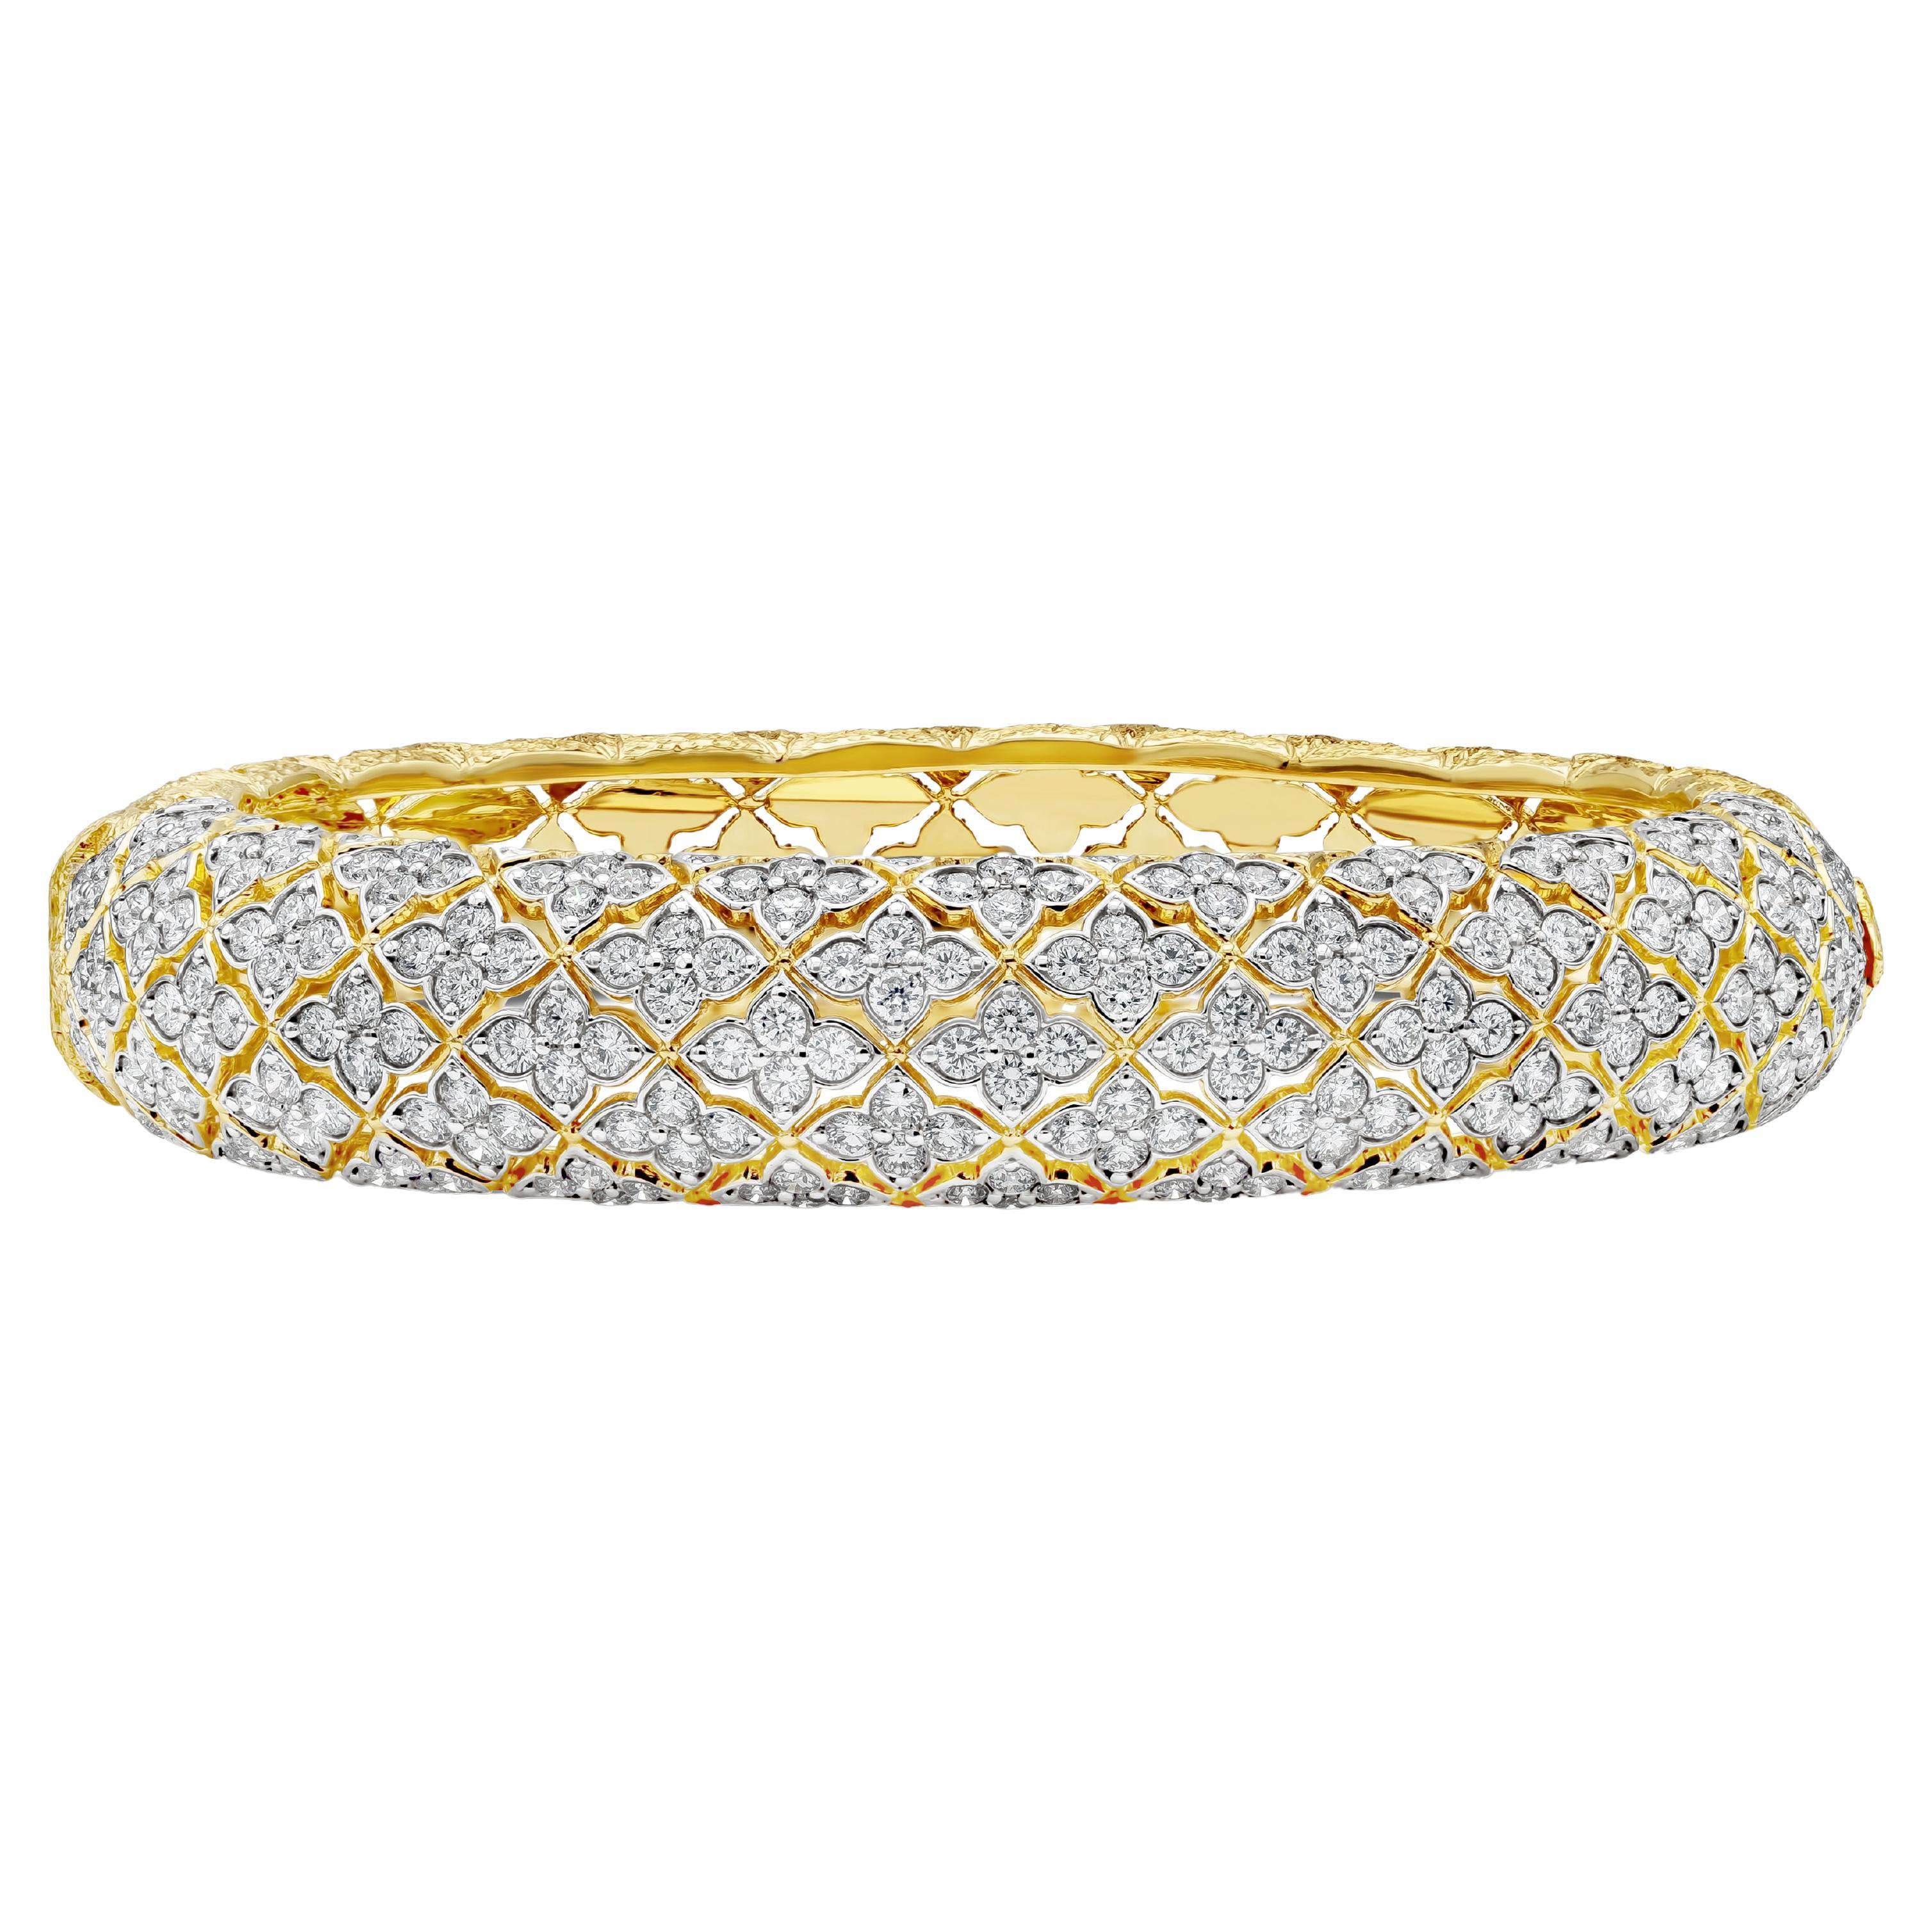 6.64 Carat Total Round Diamond in Floral Design Bangle Fashion Bracelet For Sale